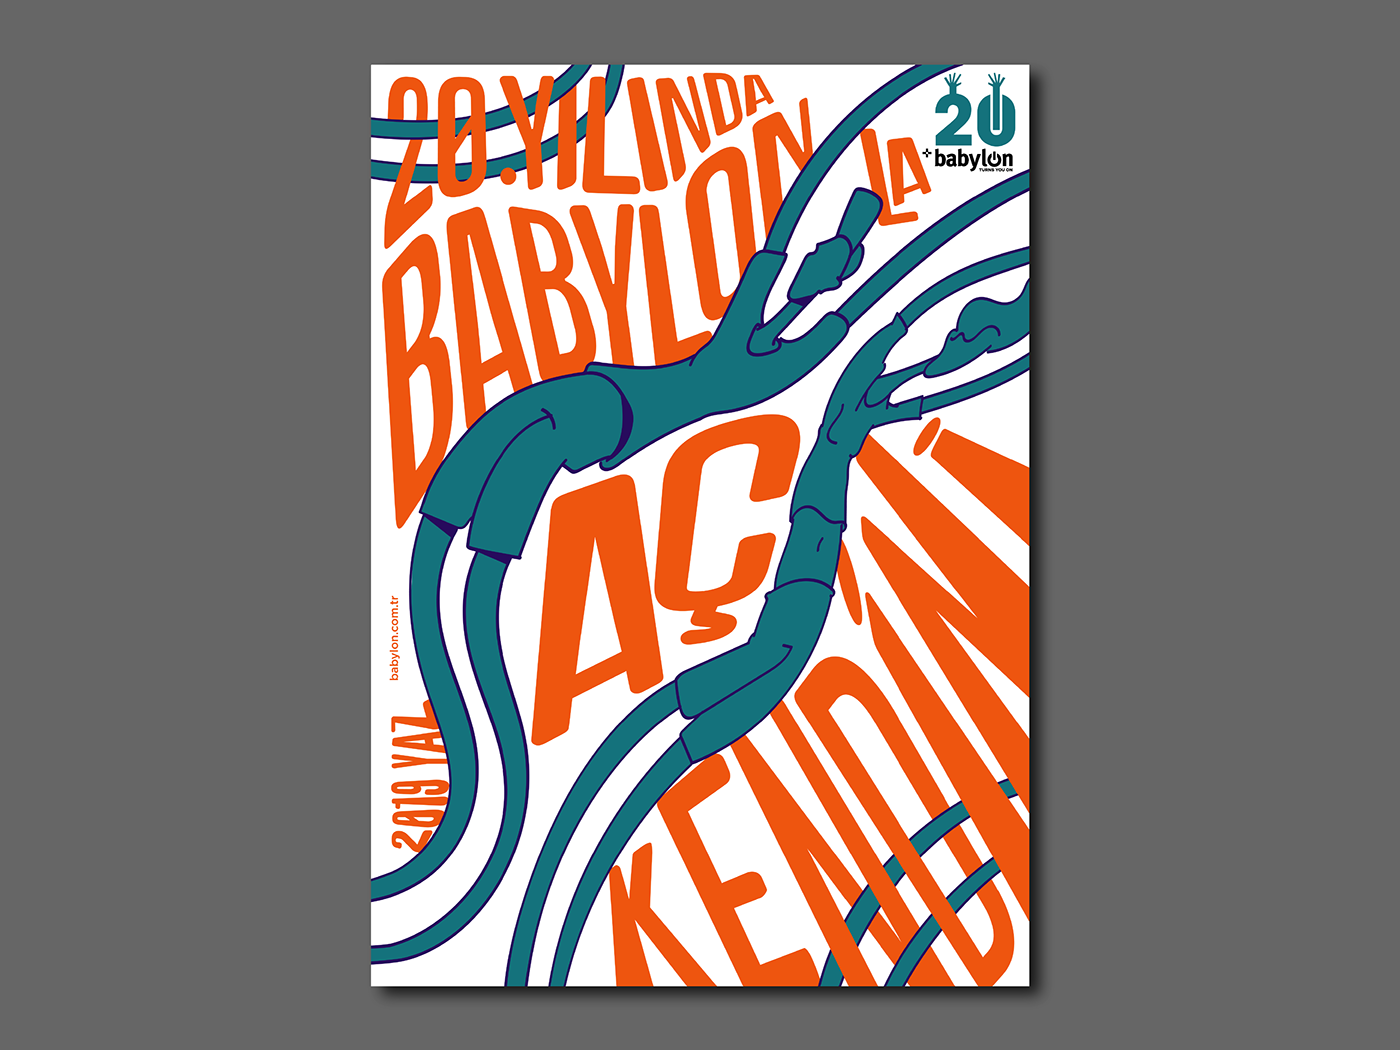 concert Event balcanmusic babylon ILLUSTRATION  poster psychedelic music techno heydouglas